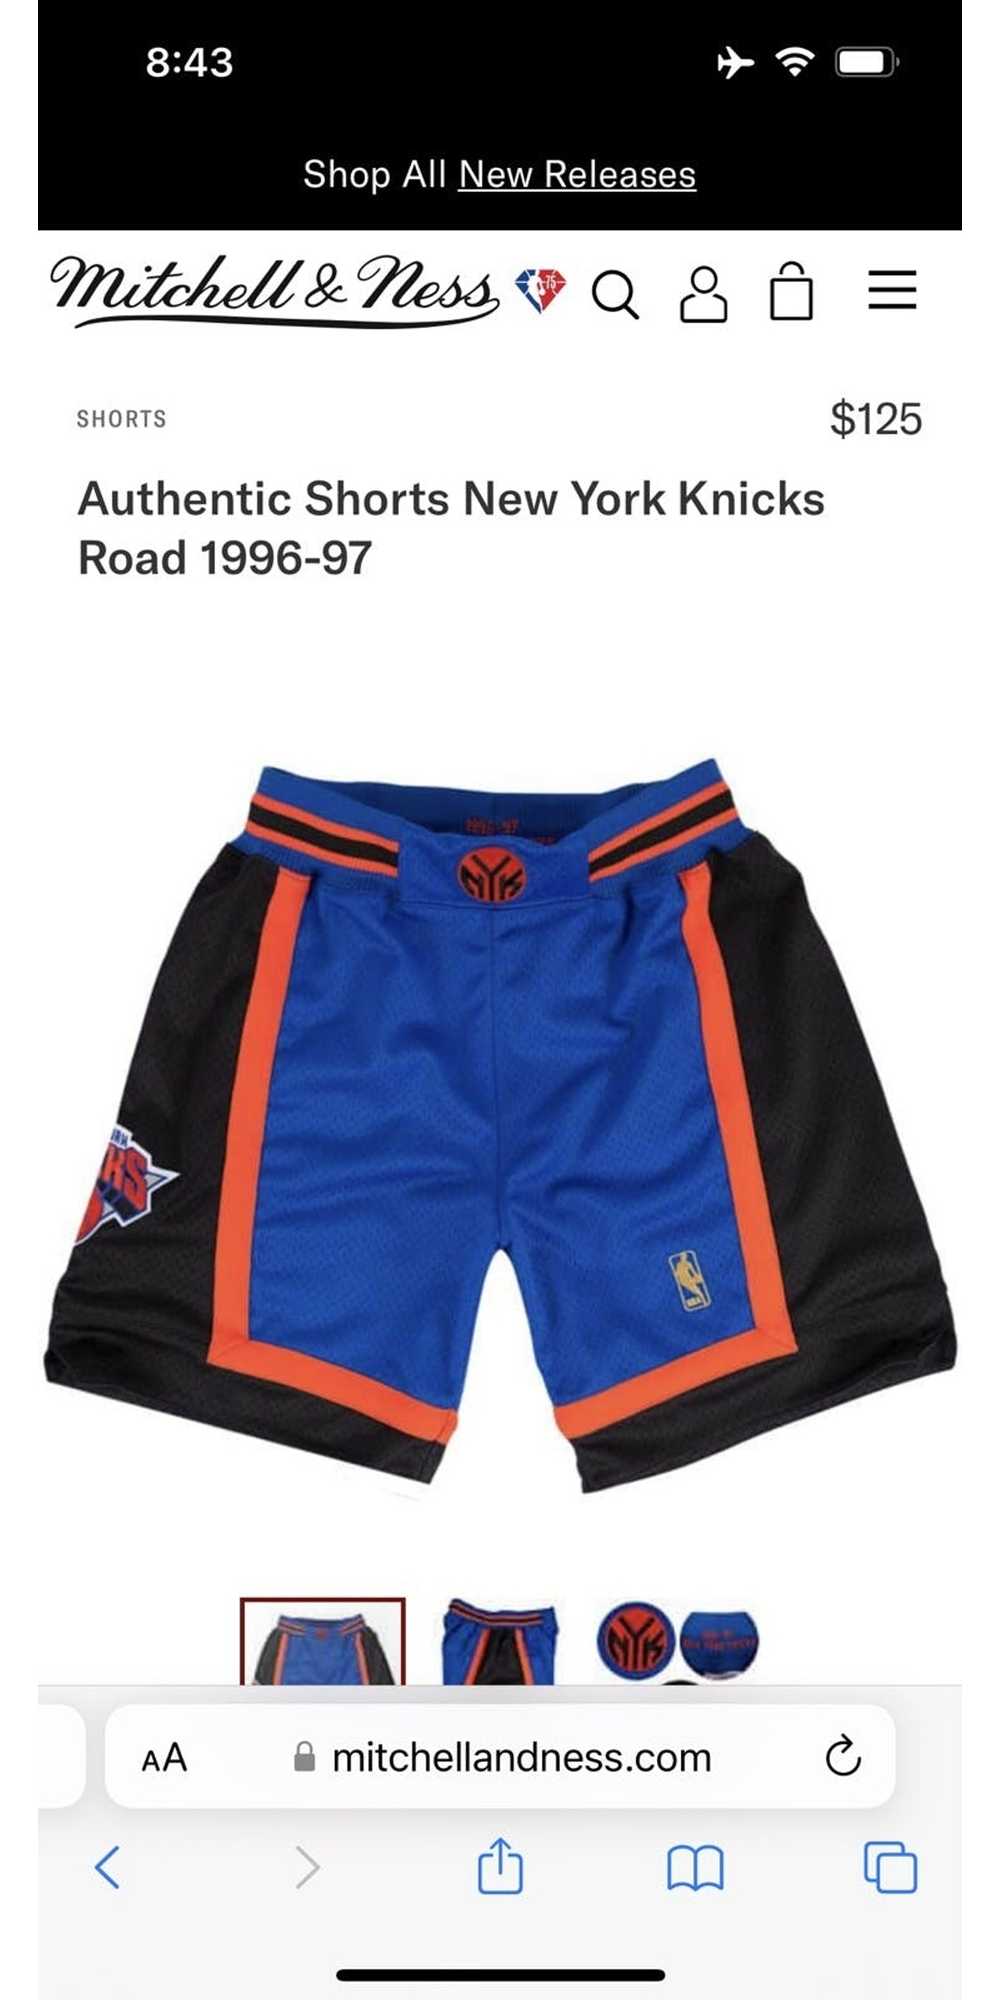 knicks authentic shorts